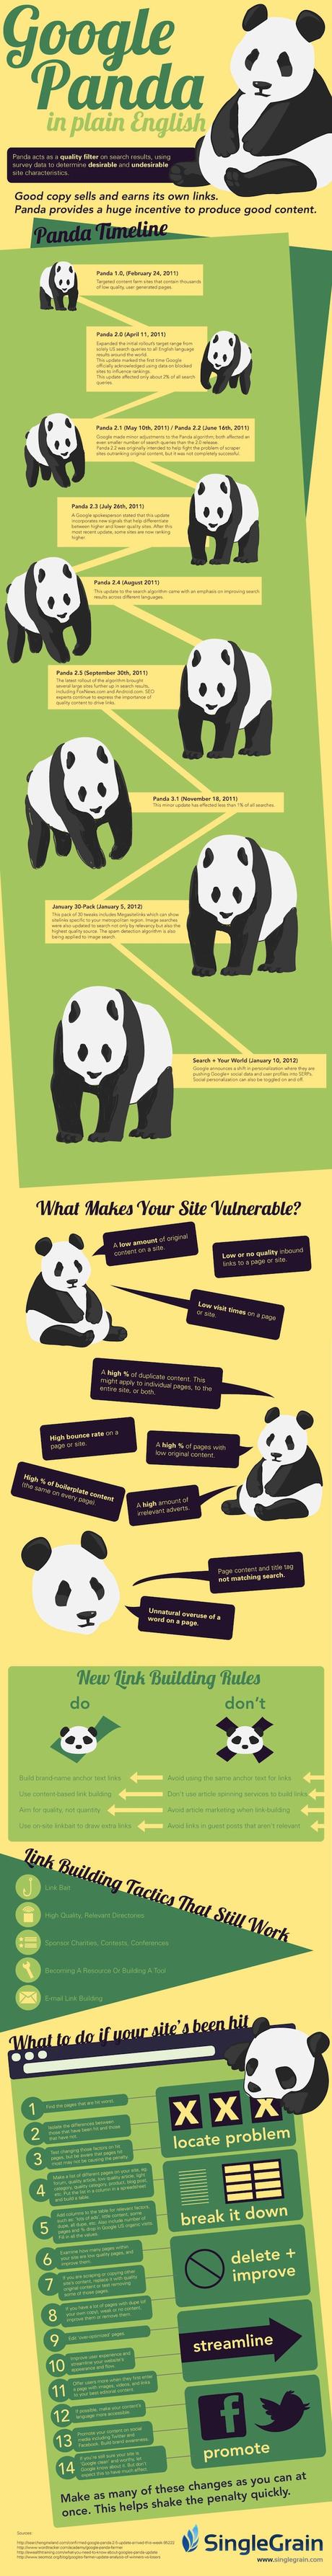 Entendiendo a Google Panda